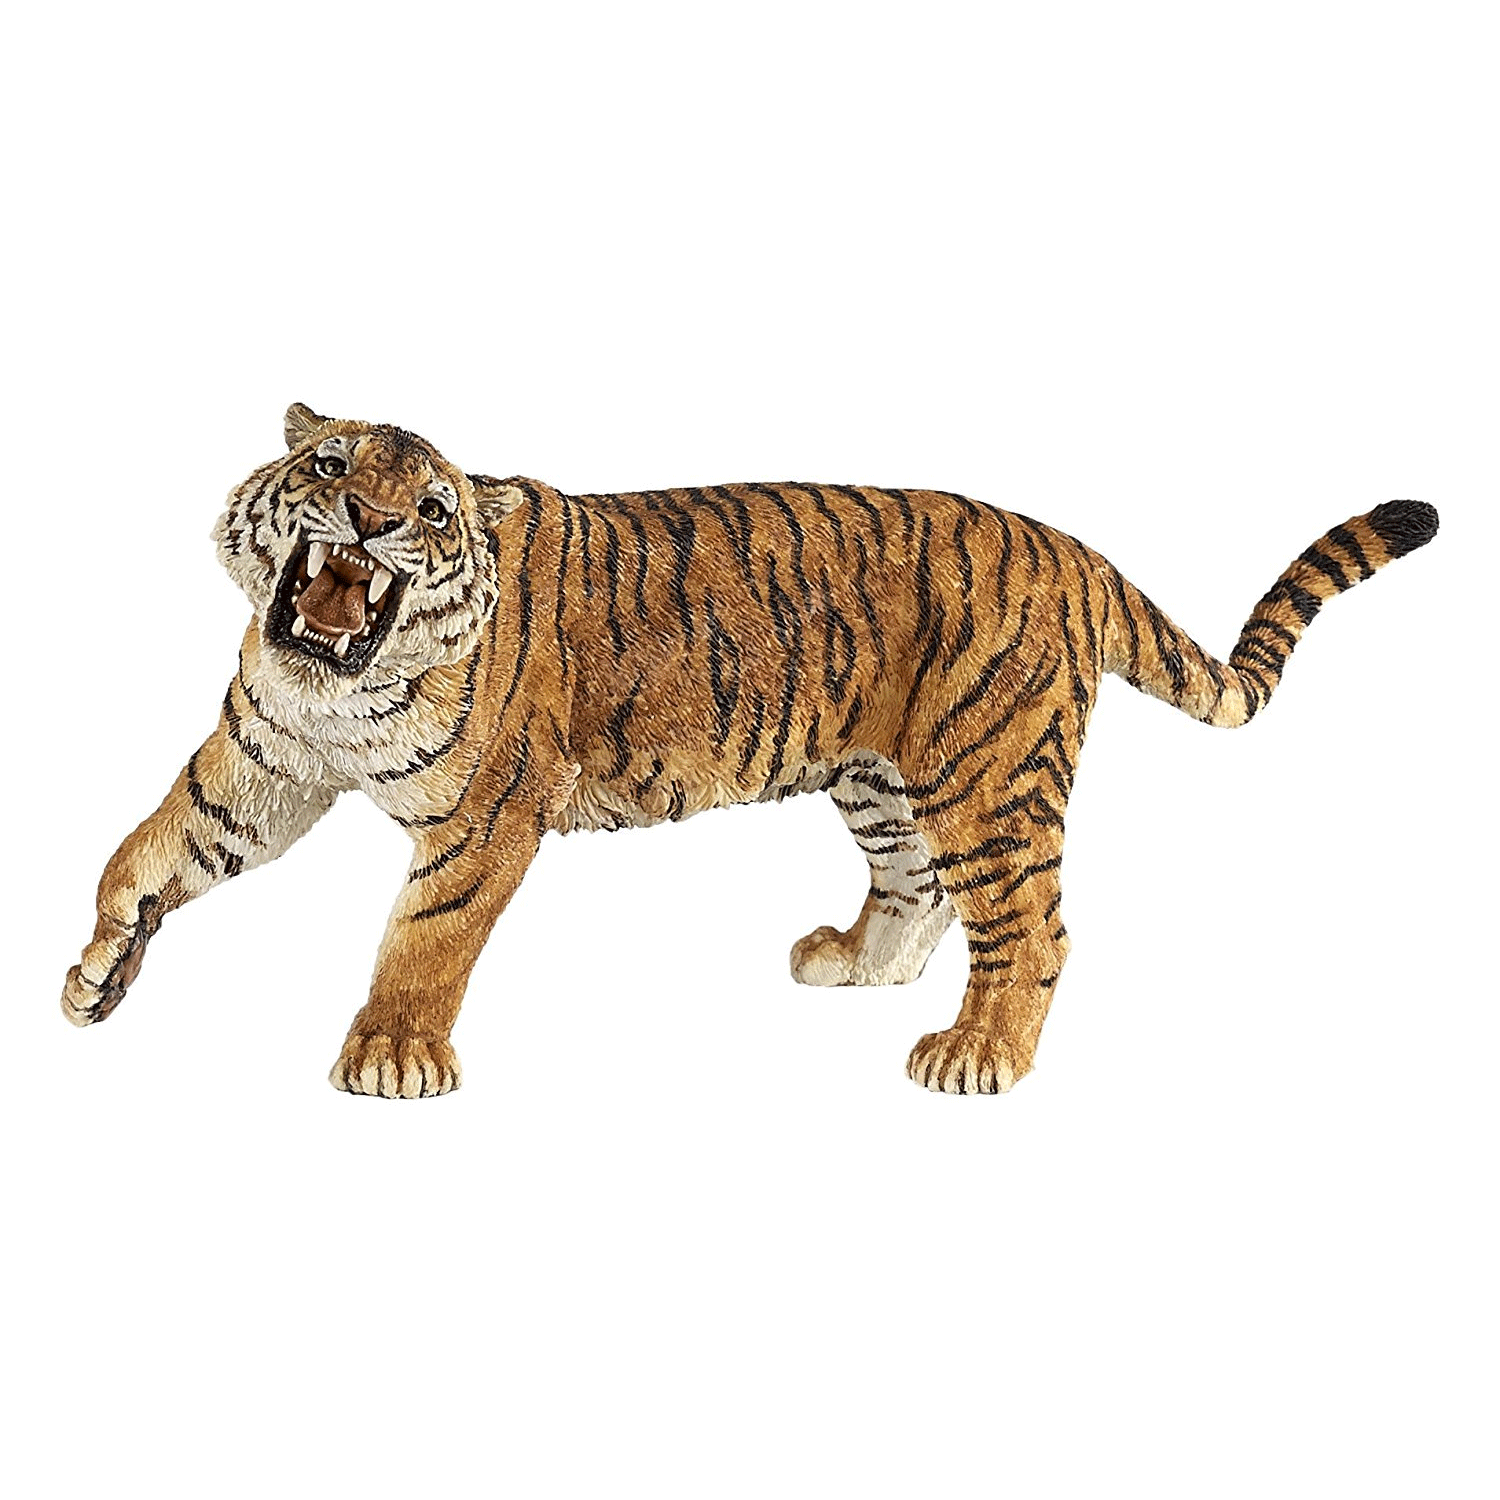 Figurine Tigre rugissant